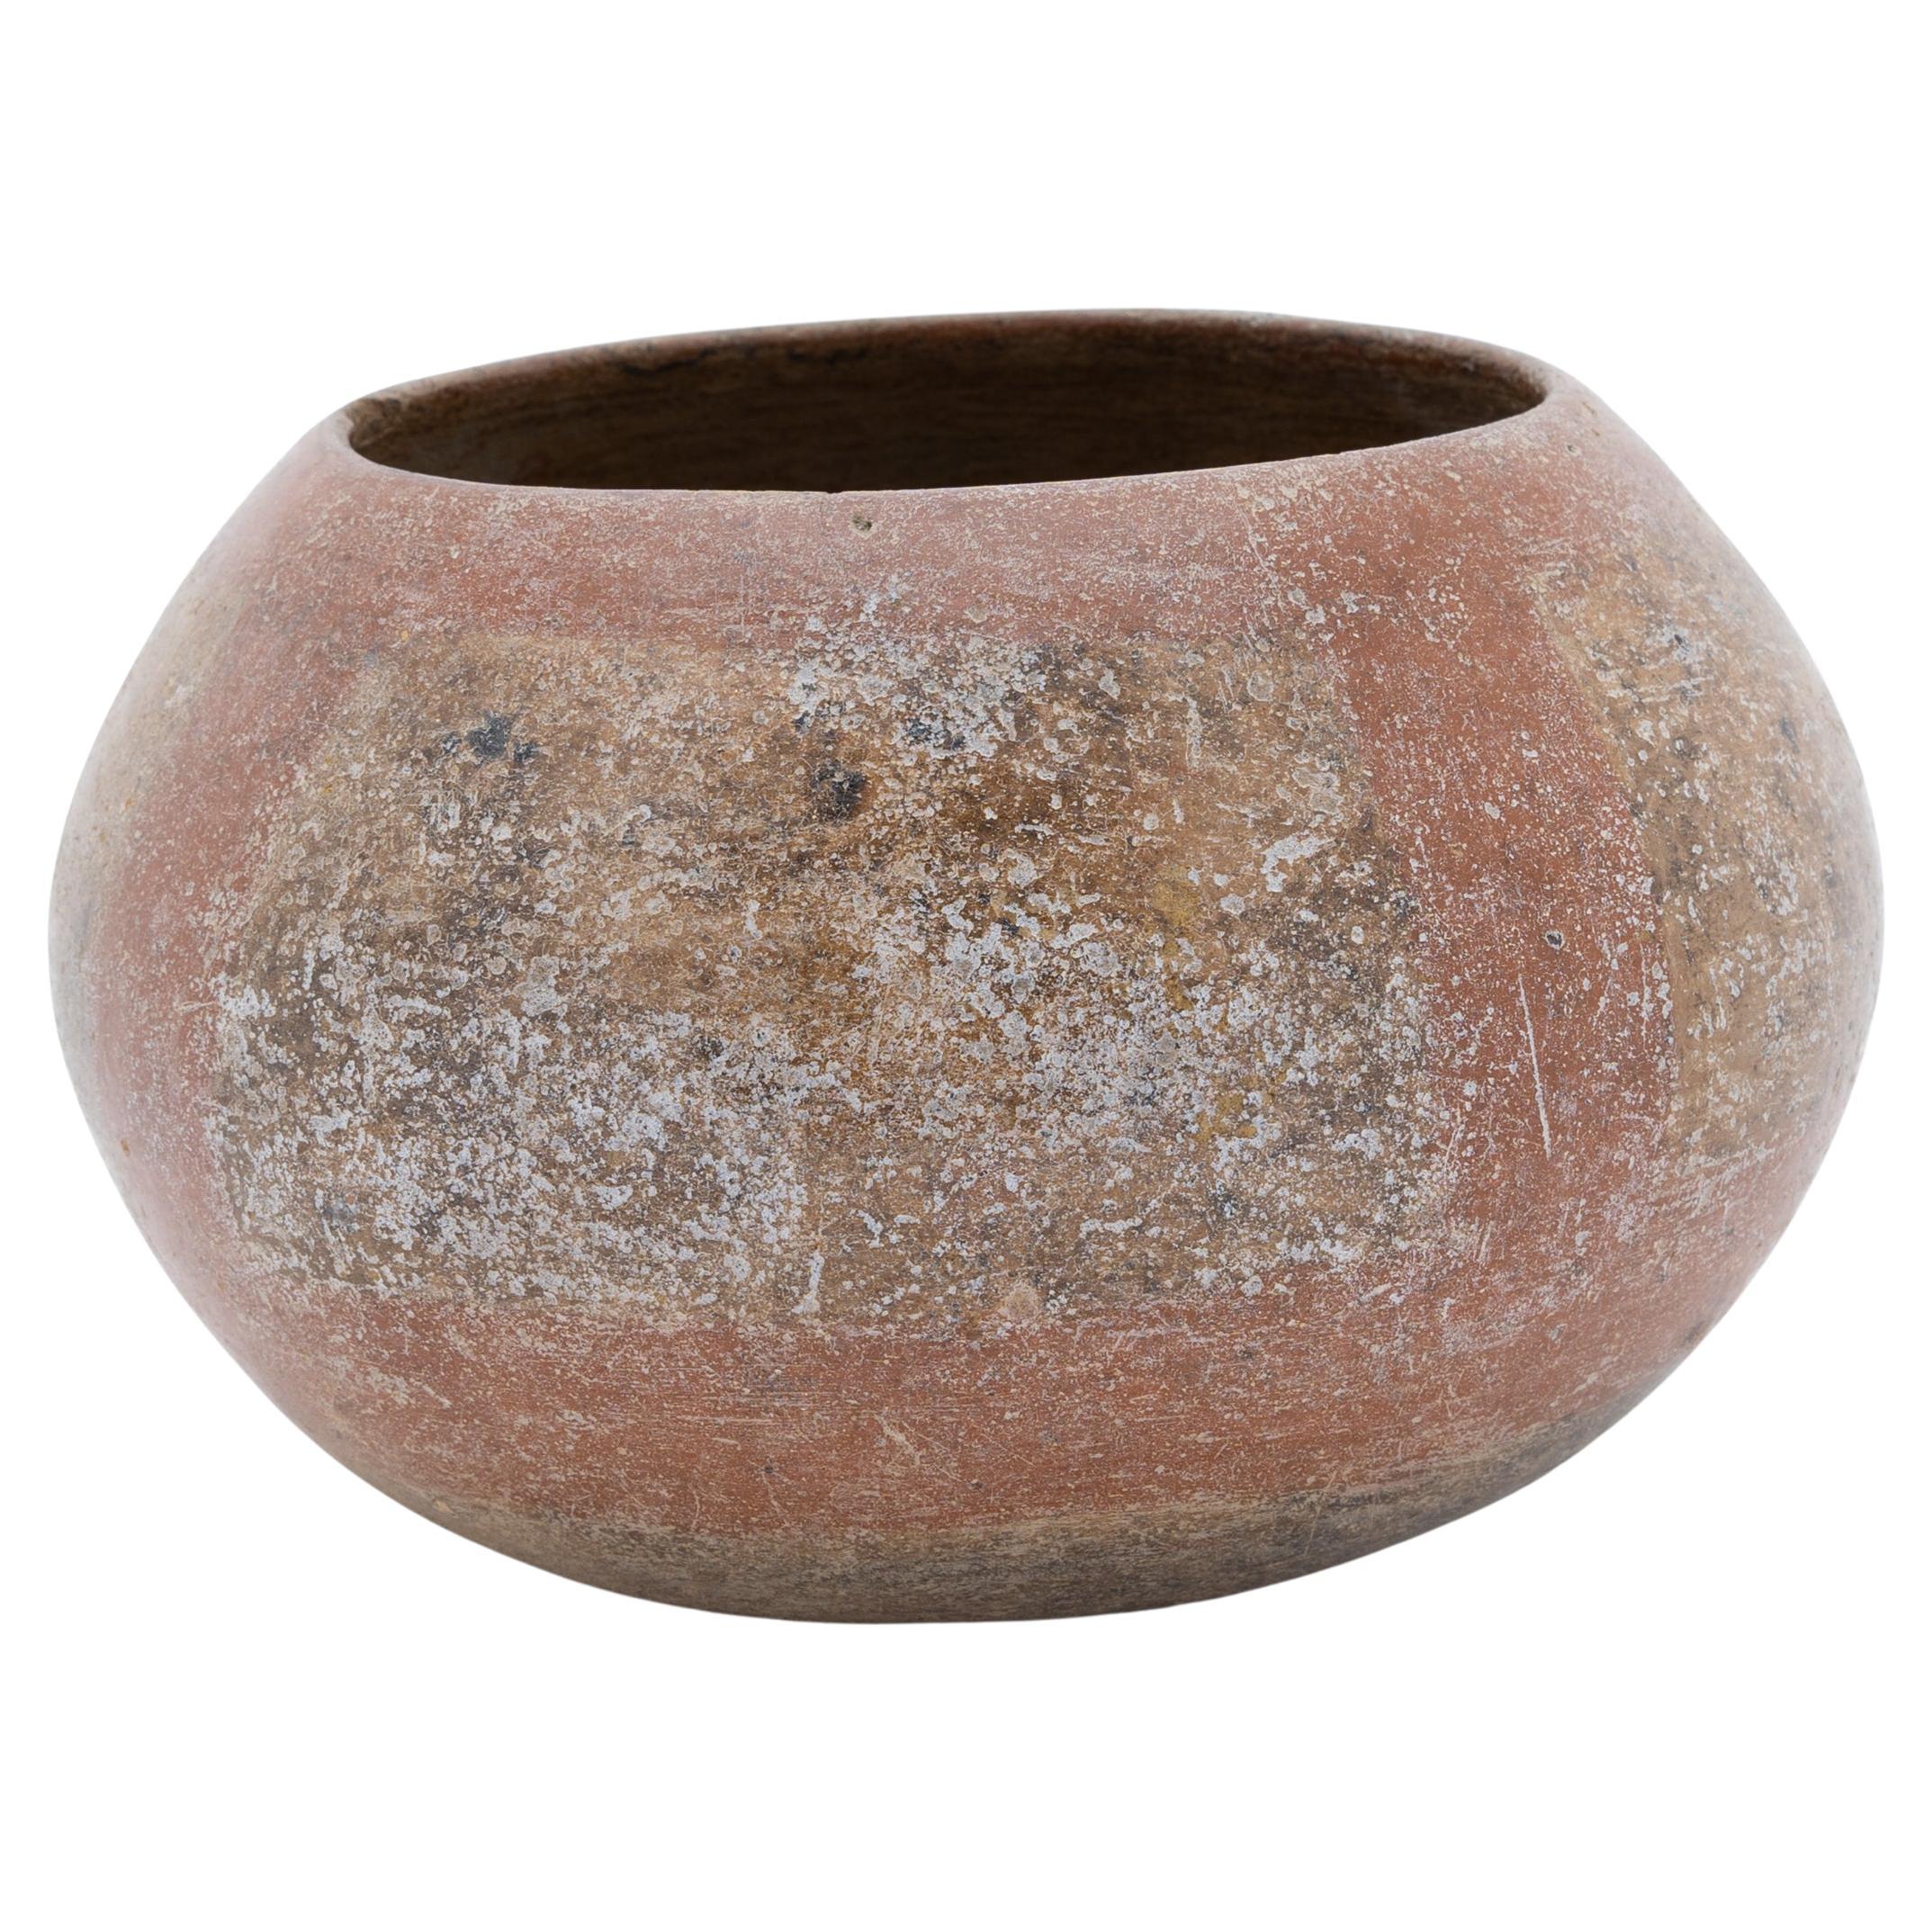 Pre-Columbian Round Redware Jar